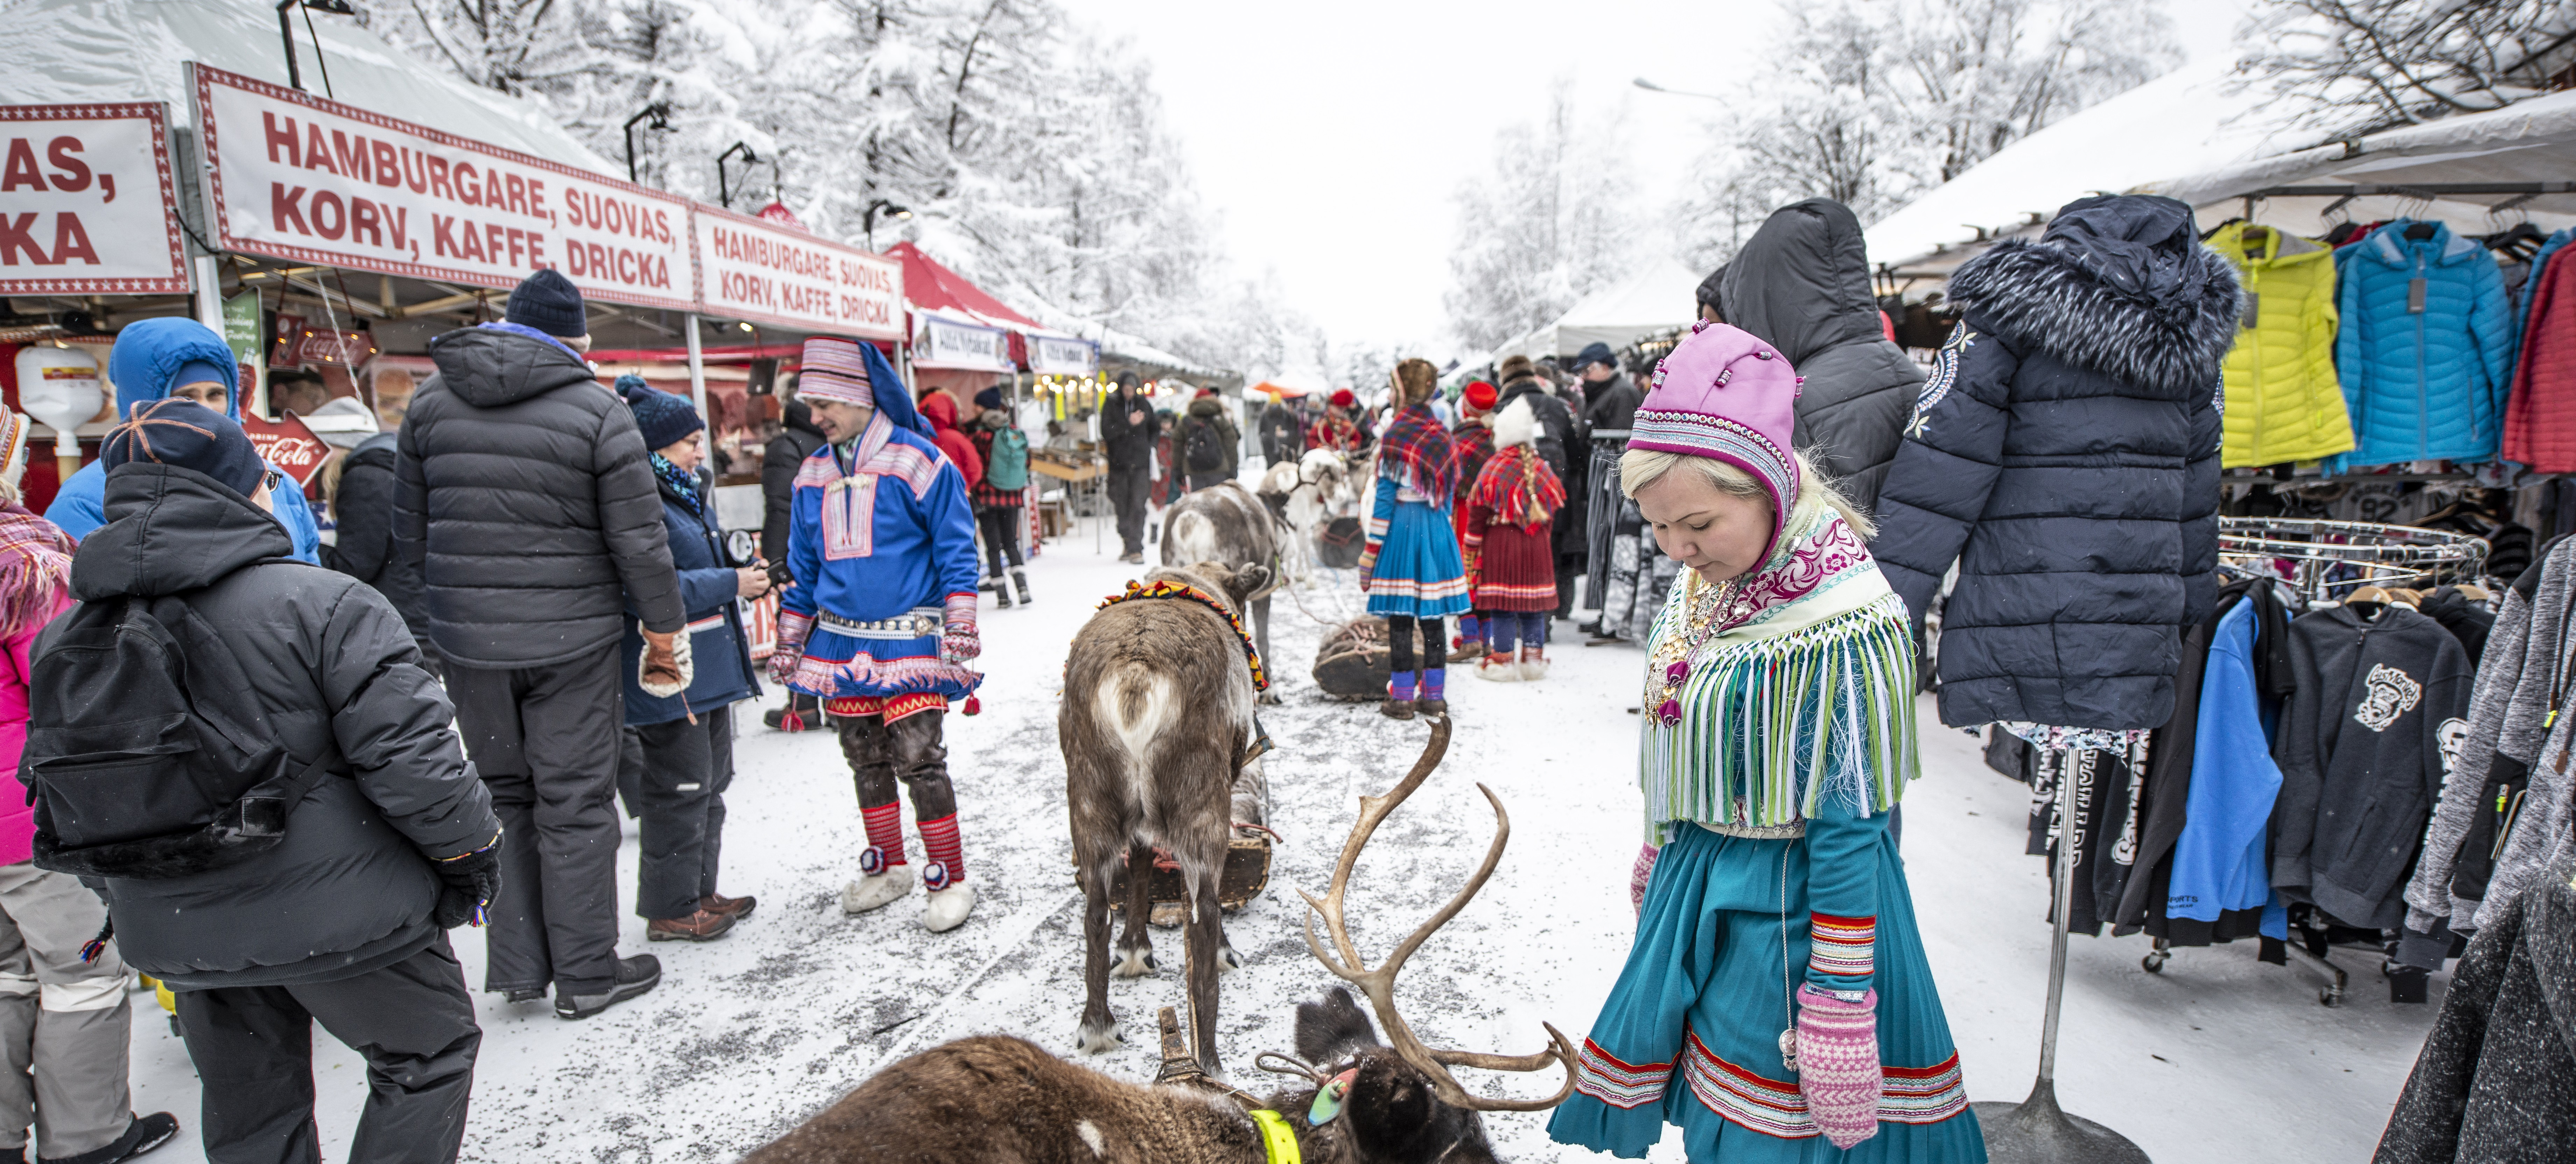 snowy marketplace sami people